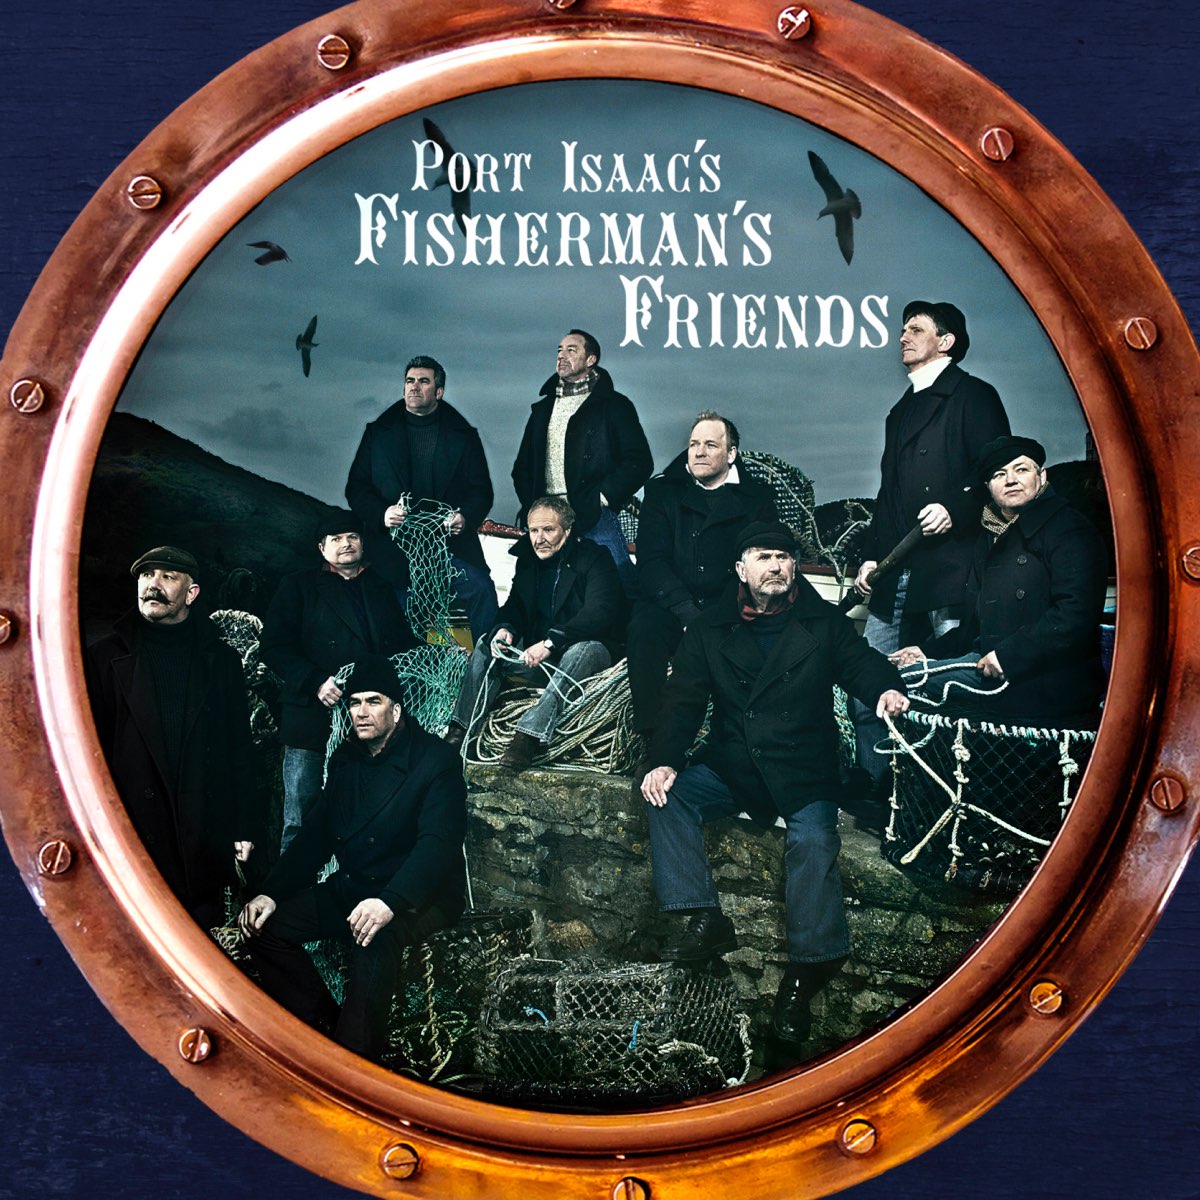 The Fisherman's Friends - Apple Music